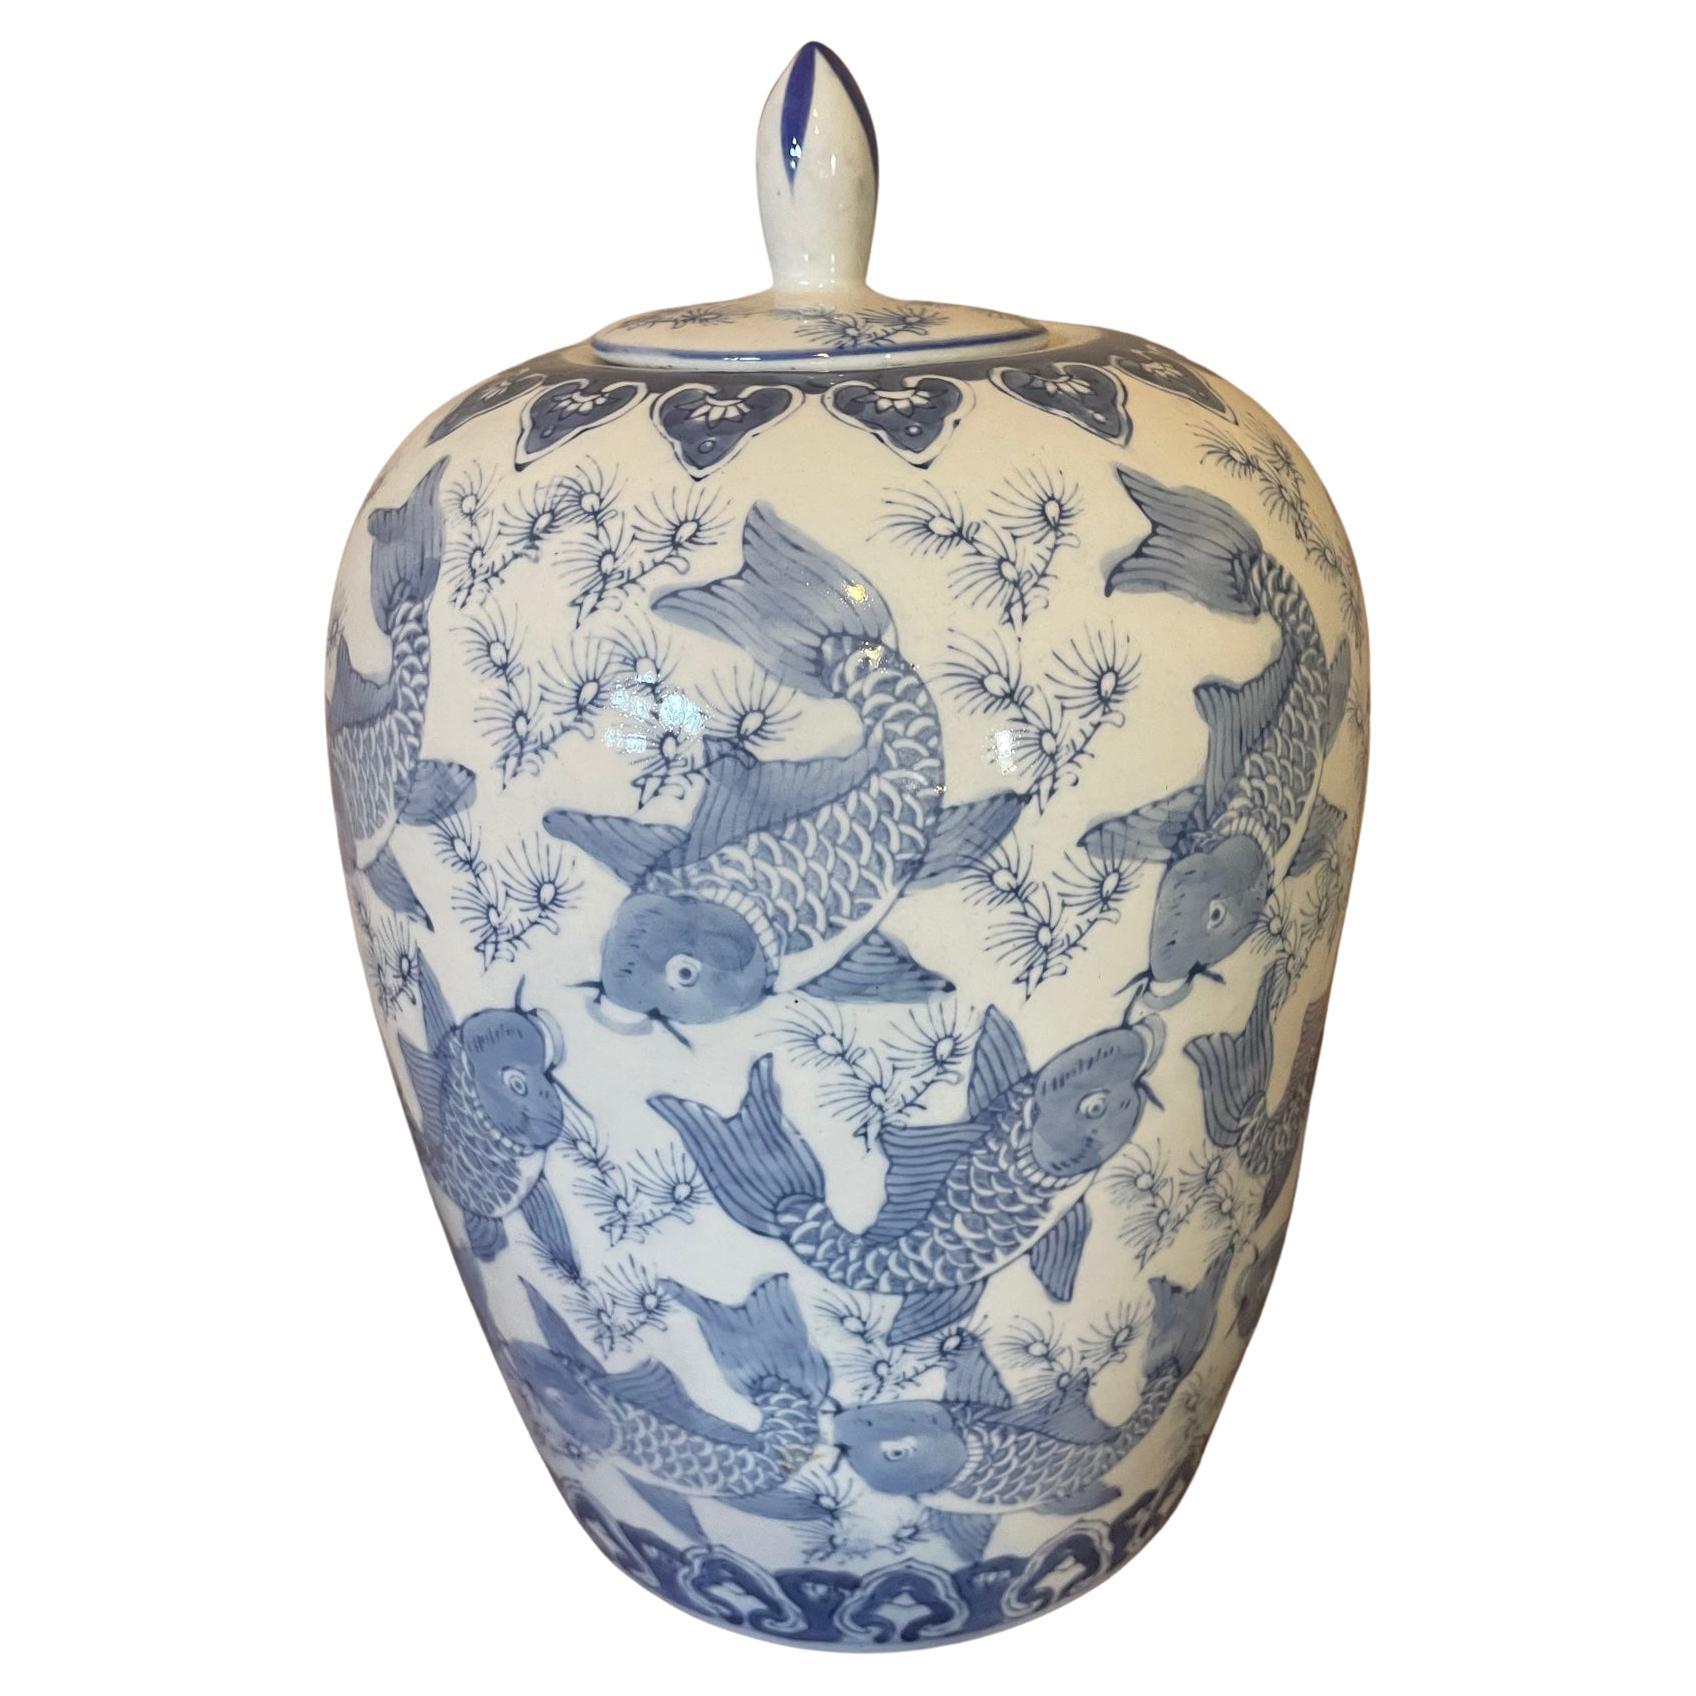 20th Century Chinese White and Blue Ceramic Vase, 1920s